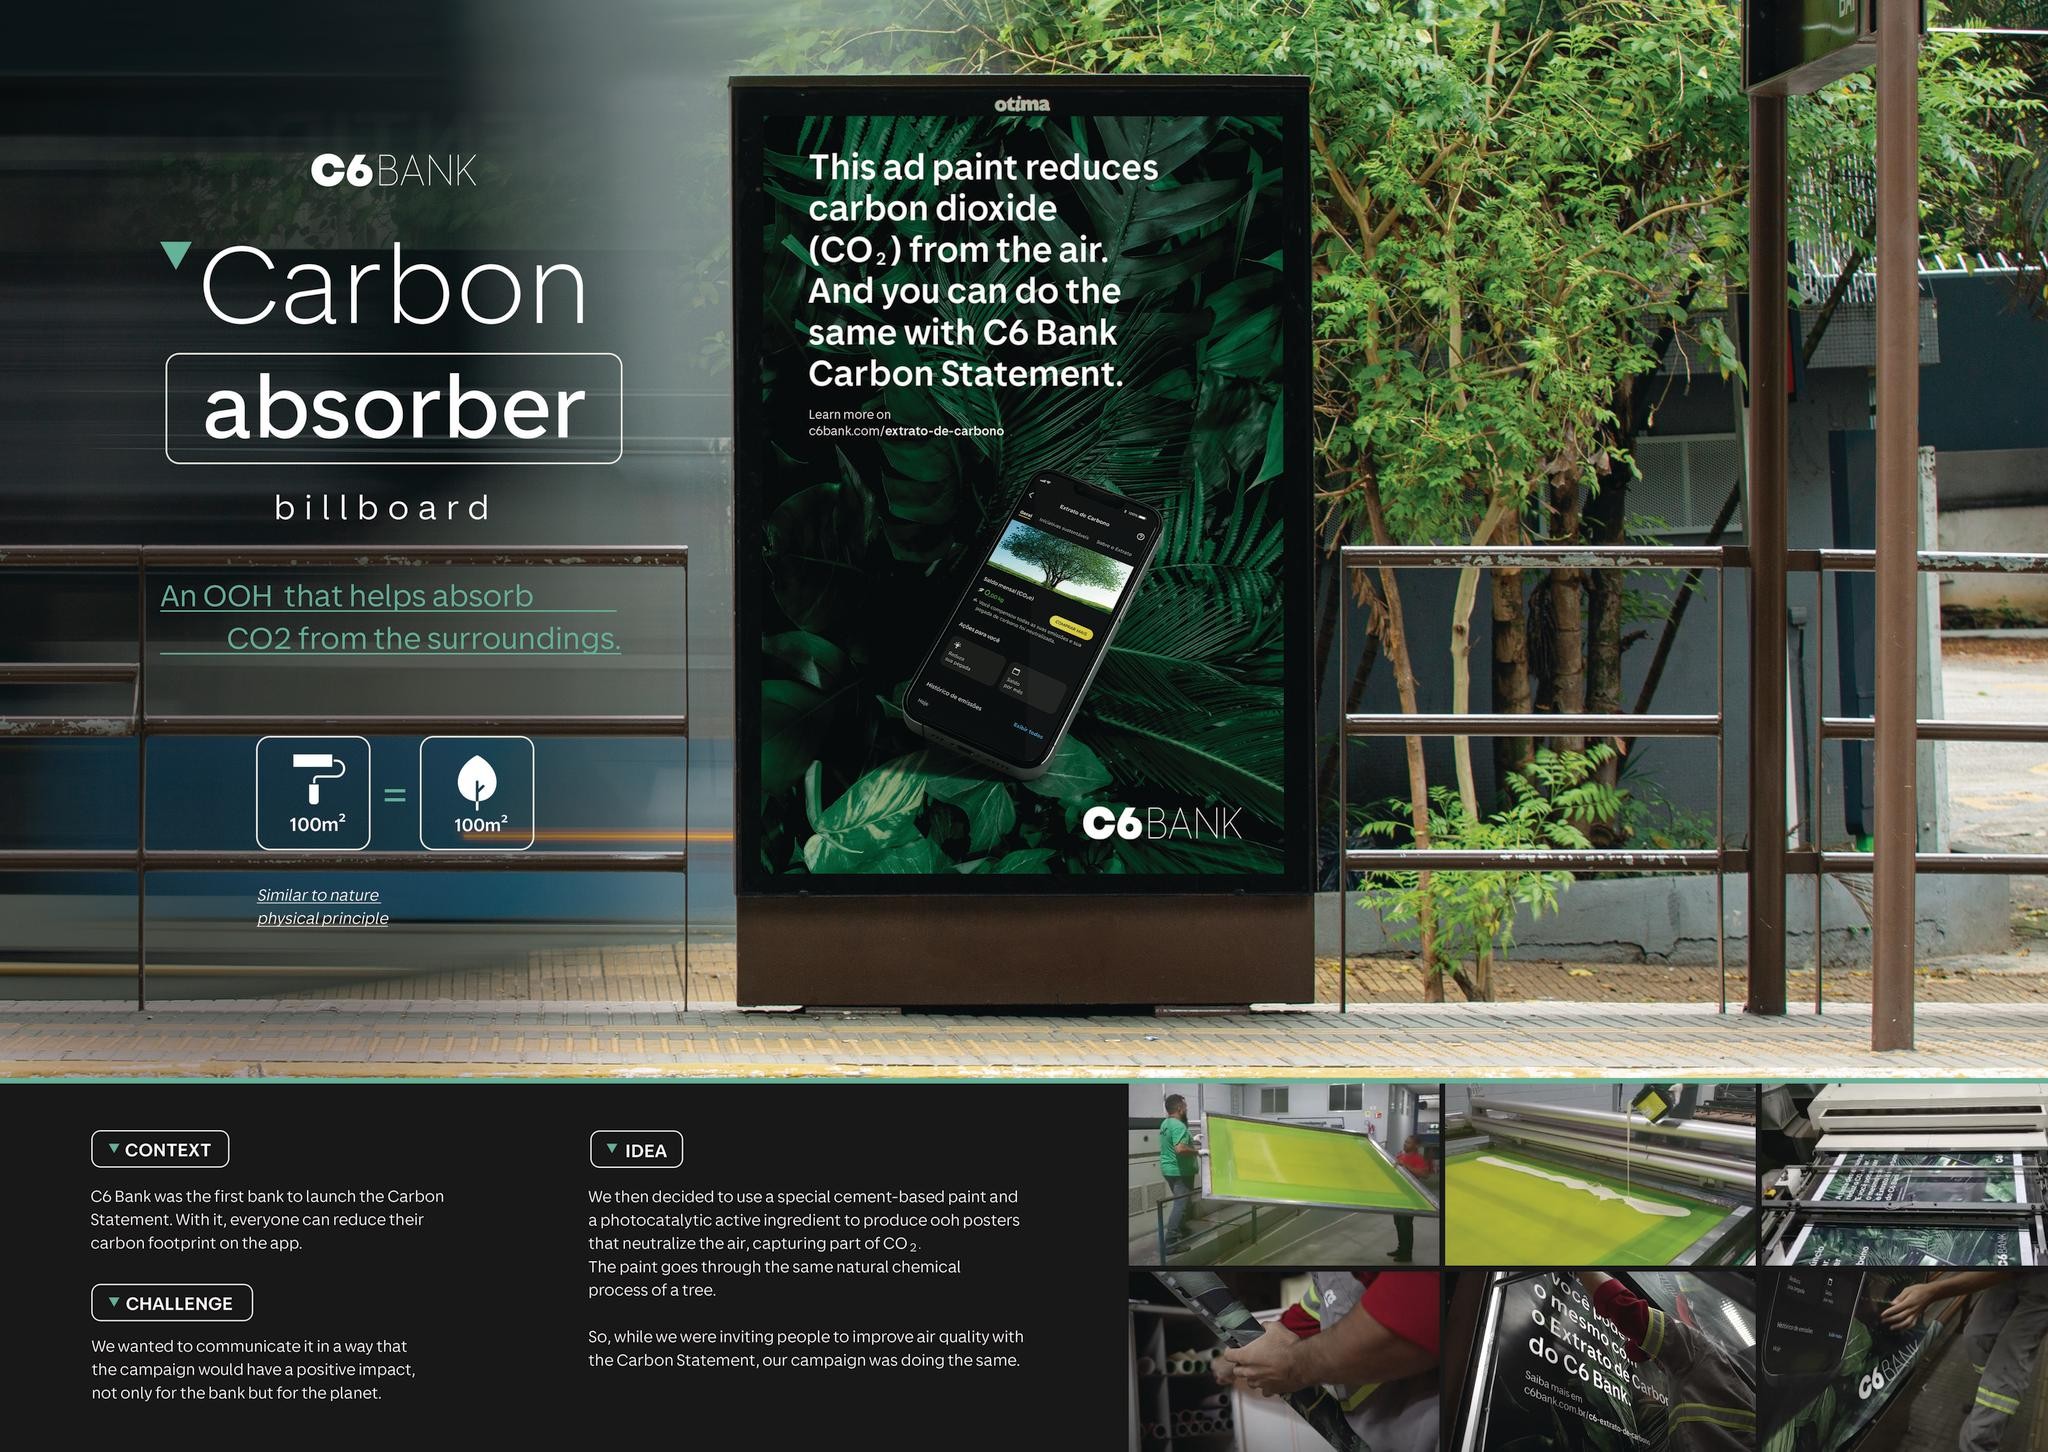 Carbon absorber billboard